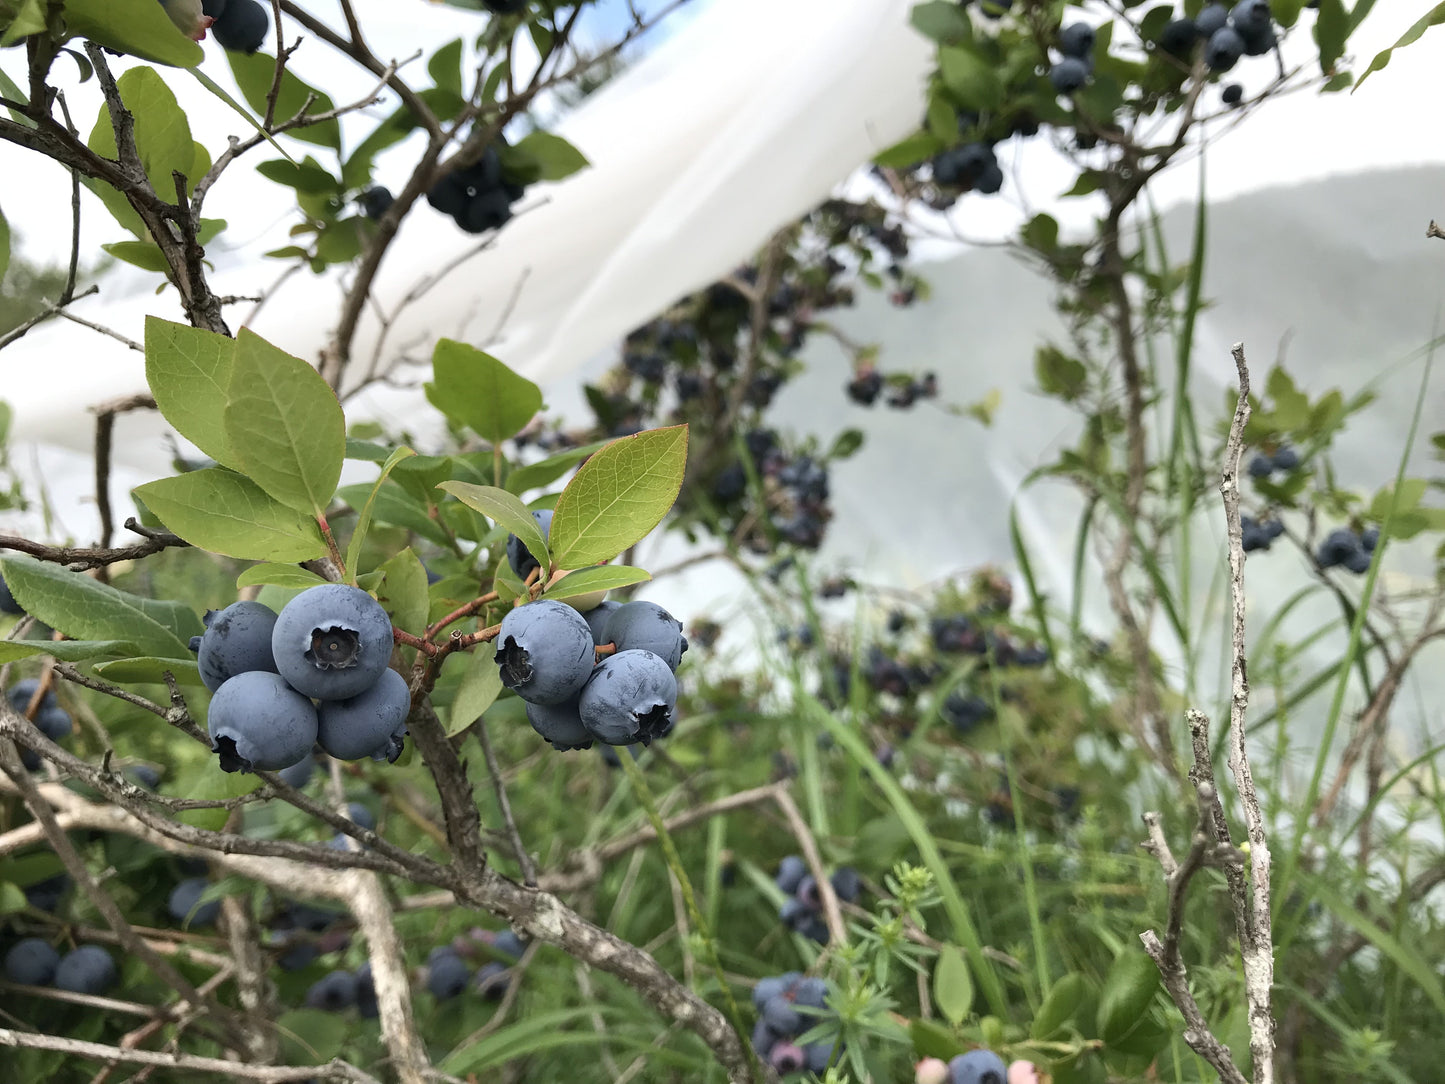 Blueray Blueberry